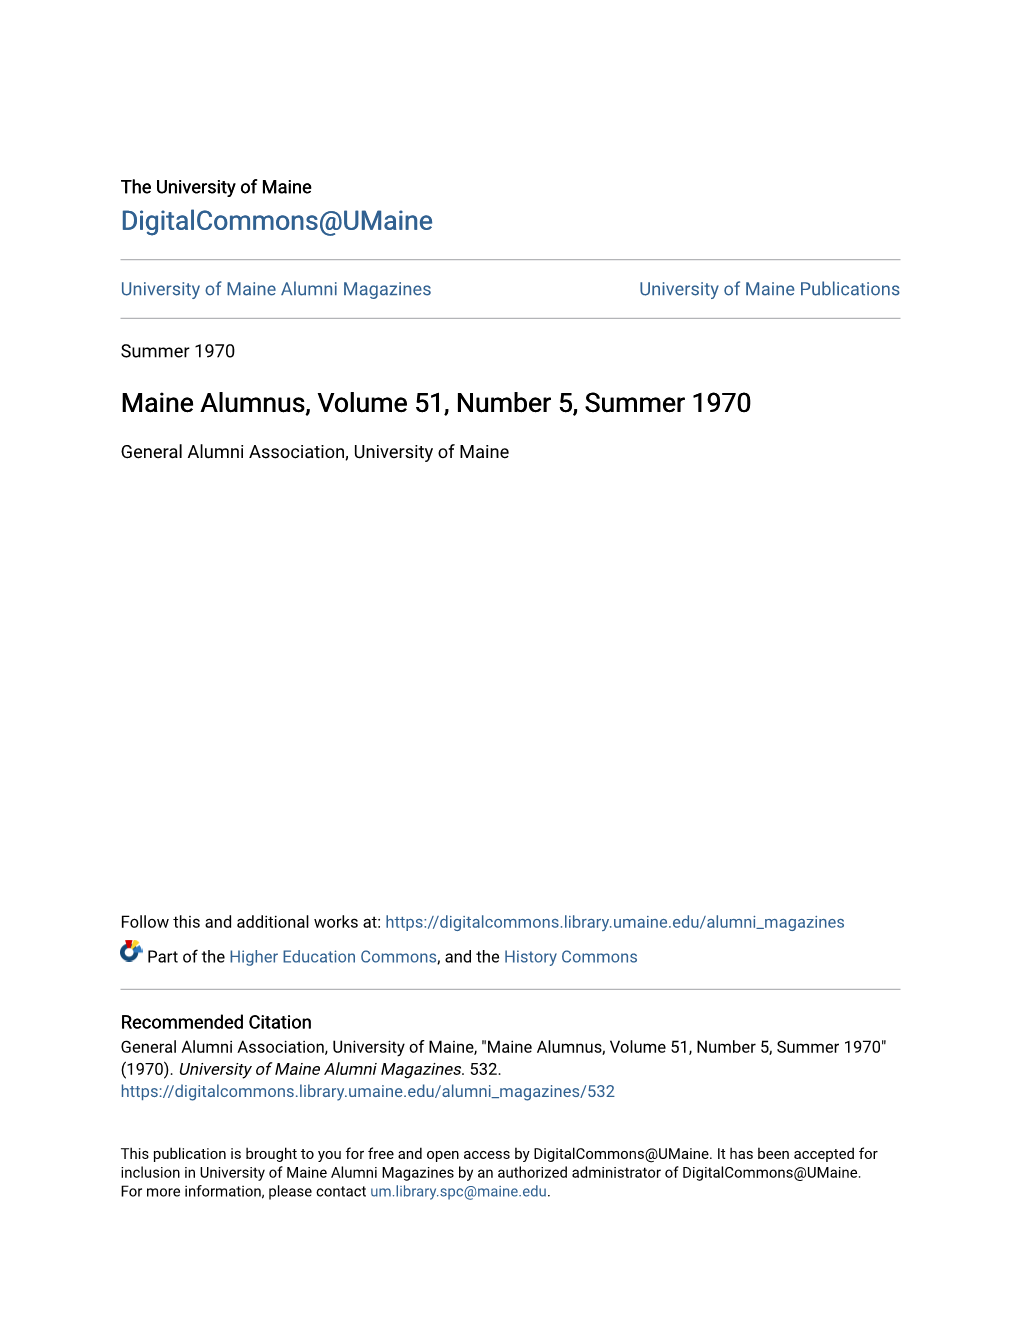 Maine Alumnus, Volume 51, Number 5, Summer 1970